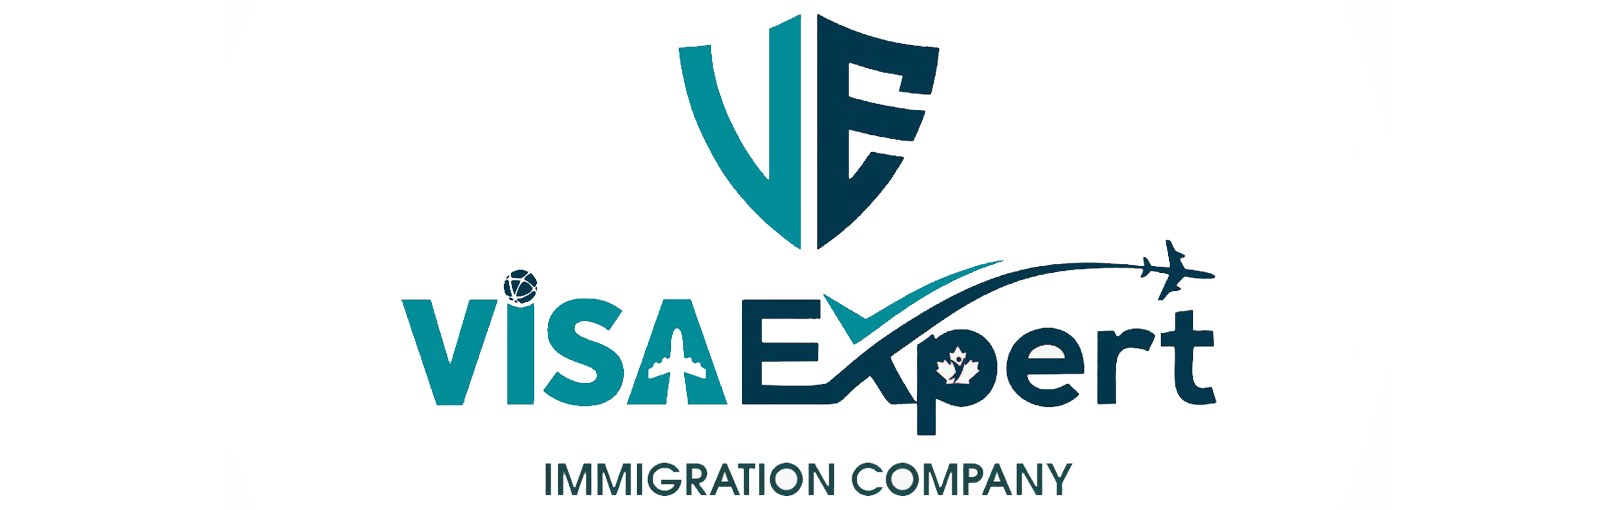 Visa Expert Immigration Company|Legal Services|Professional Services